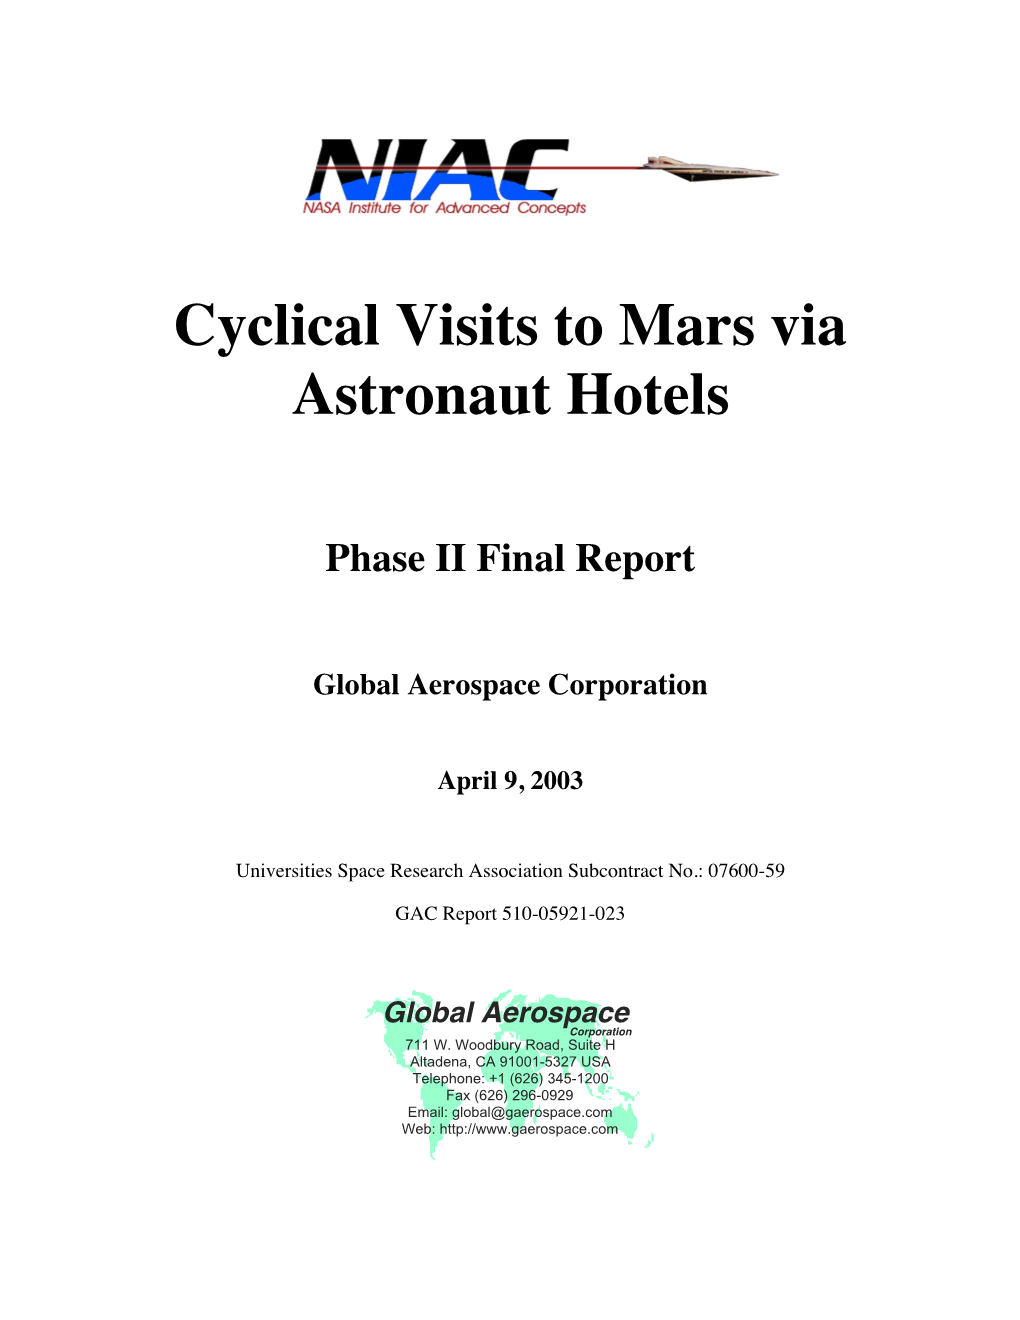 Cyclical Visits to Mars Via Astronaut Hotels